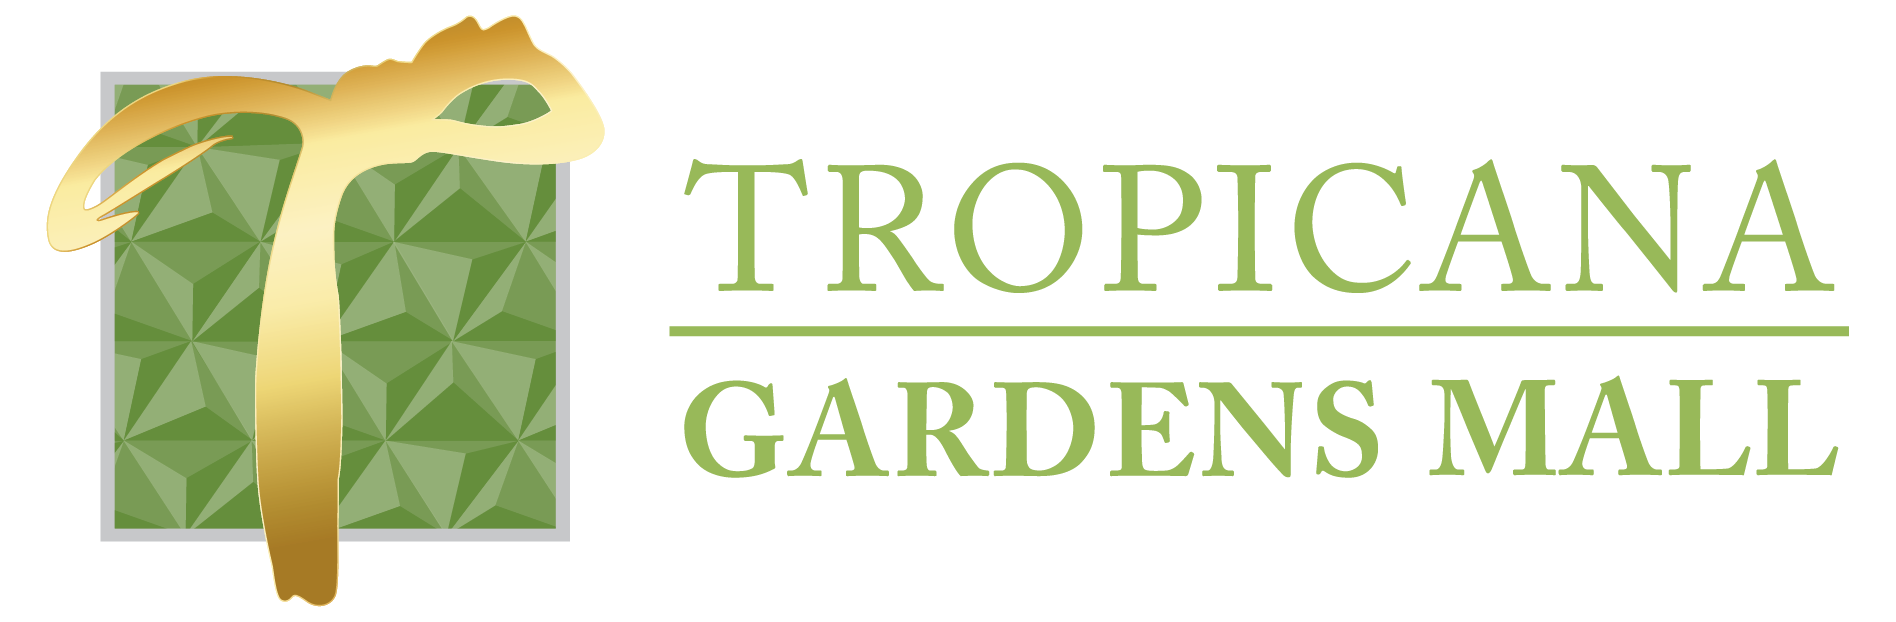 Tropicana Gardens Mall Logo